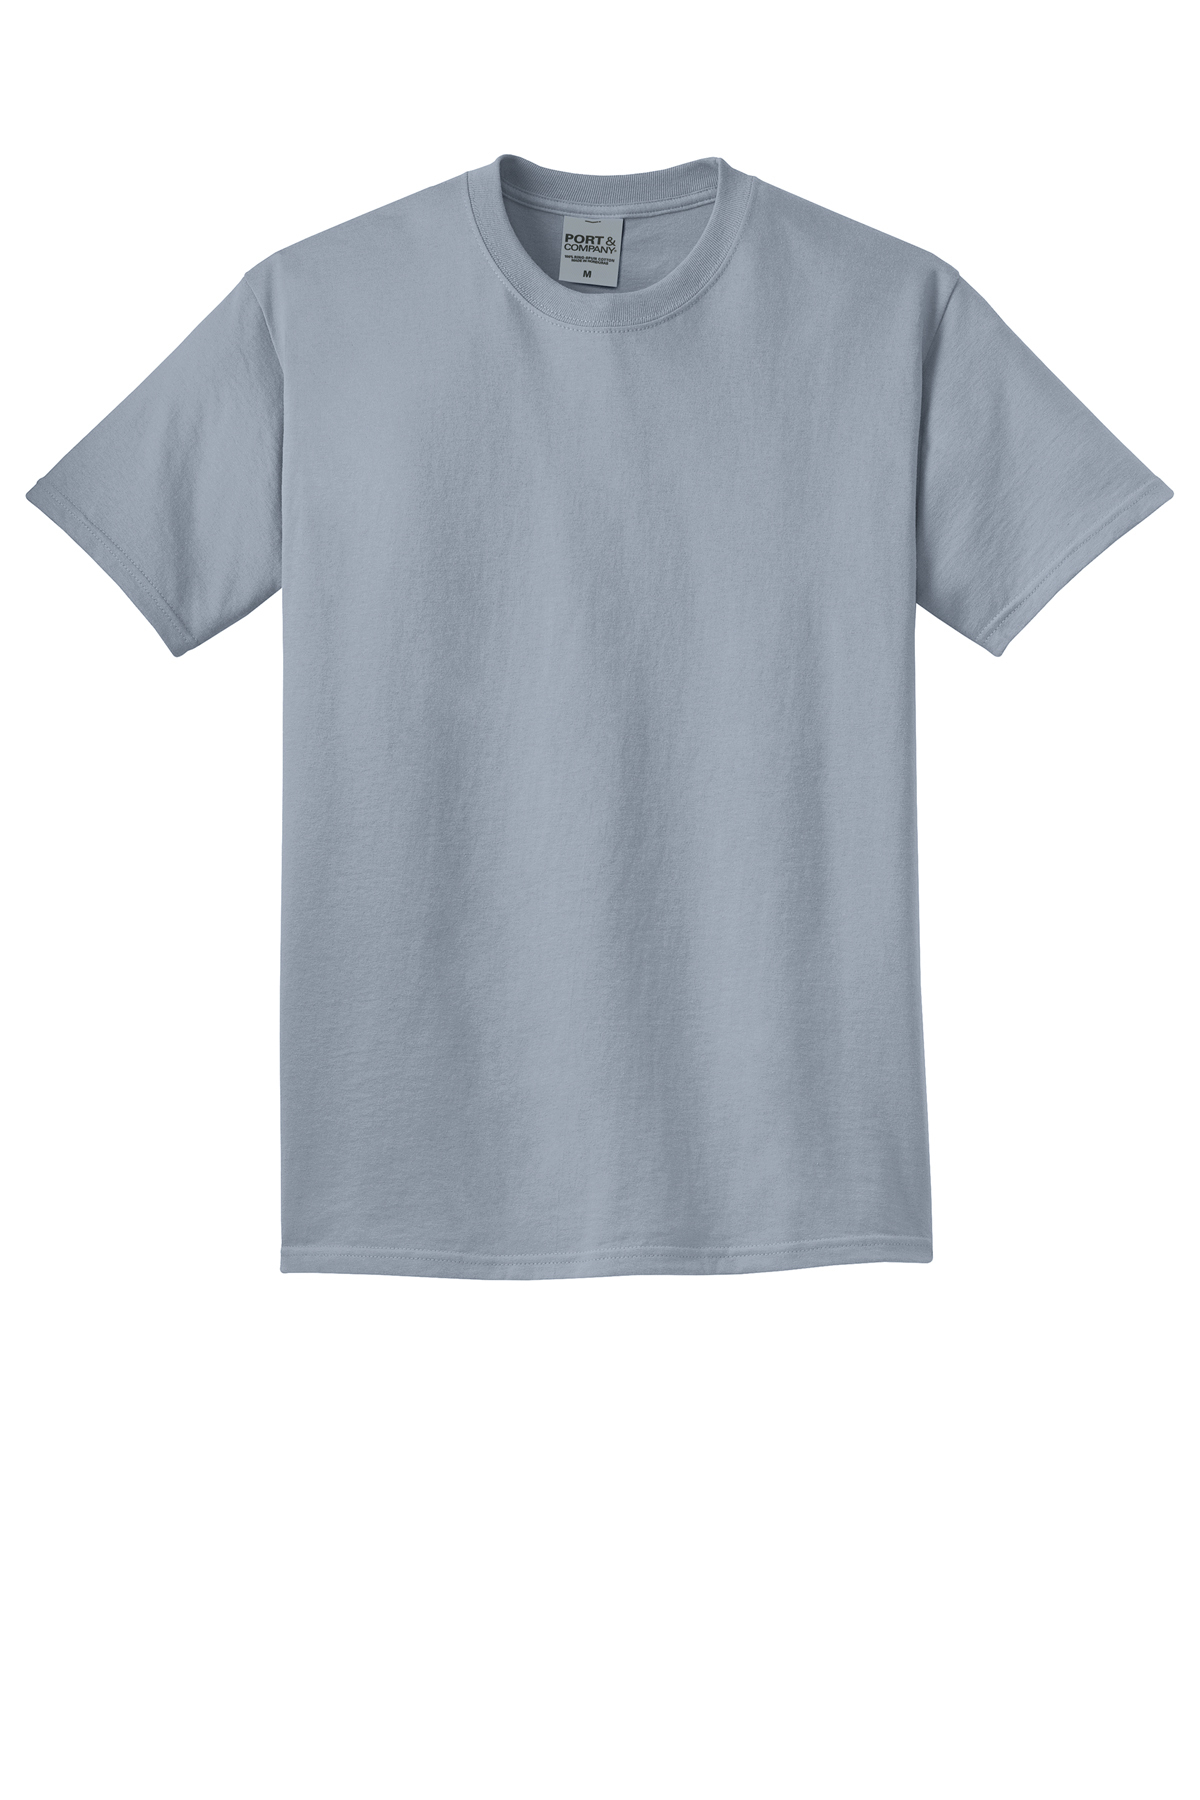 Port & Company Beach Wash Garment-Dyed Crewneck Sweatshirt, Product